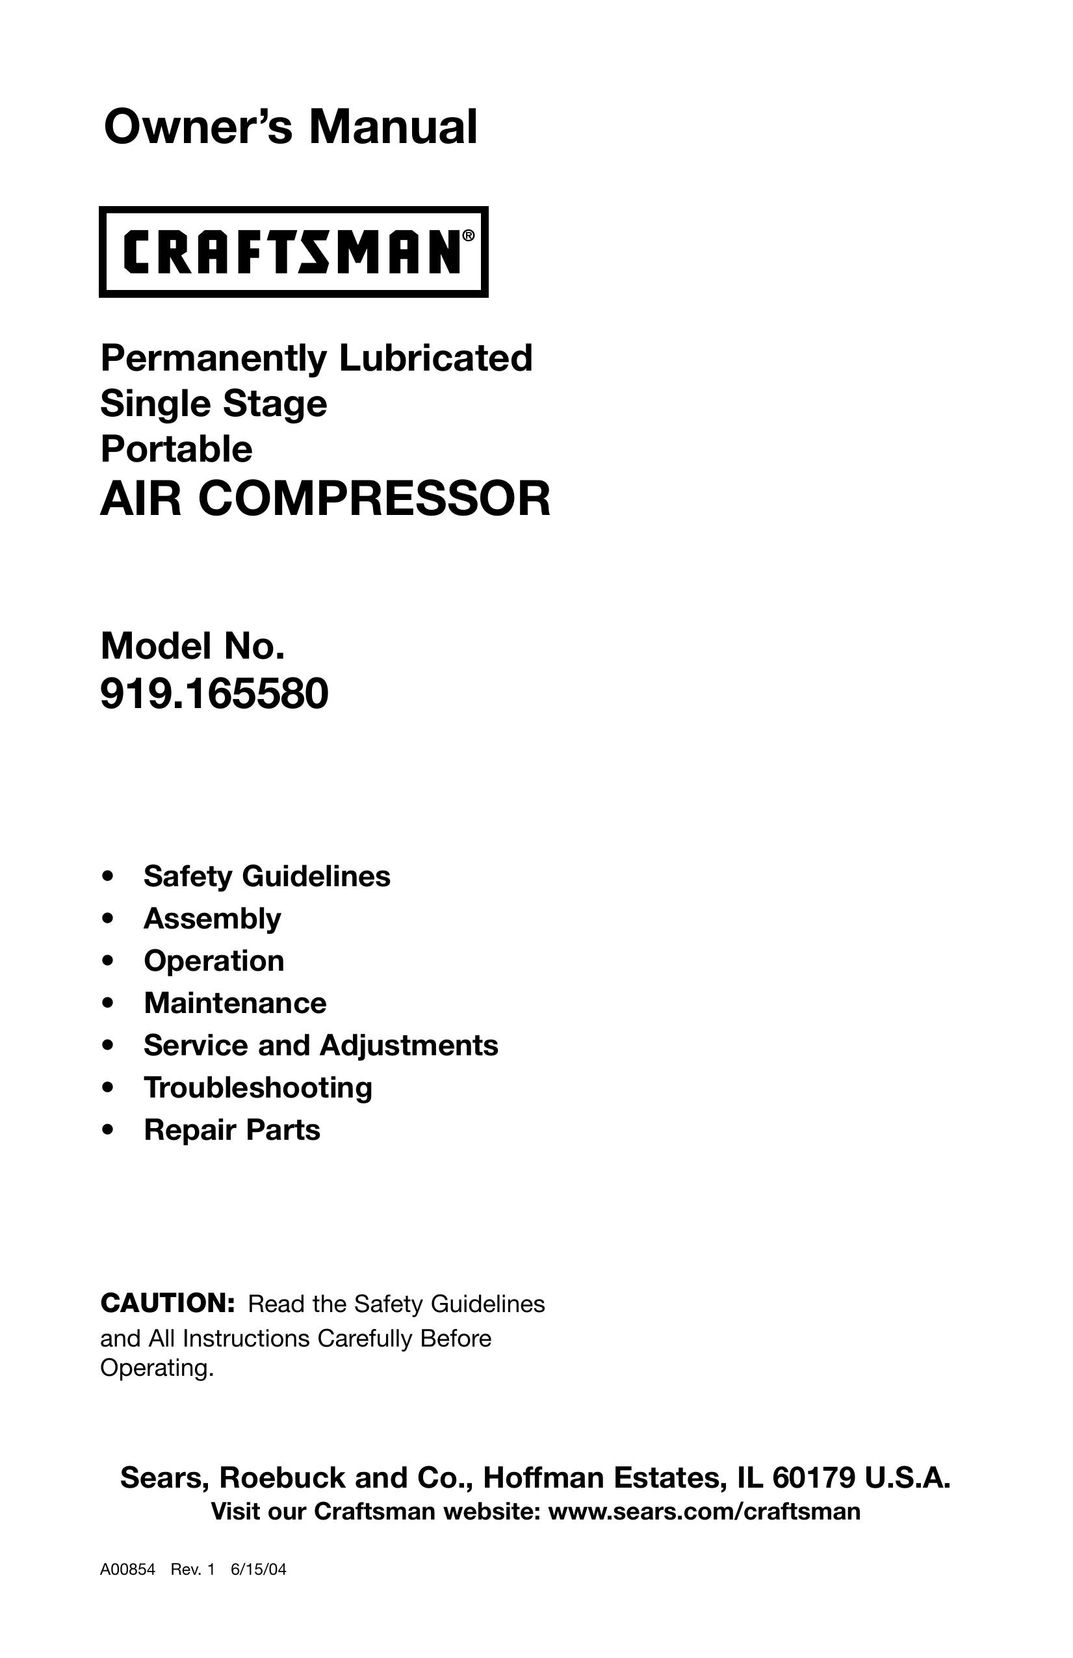 Craftsman 919.16558 Air Compressor User Manual